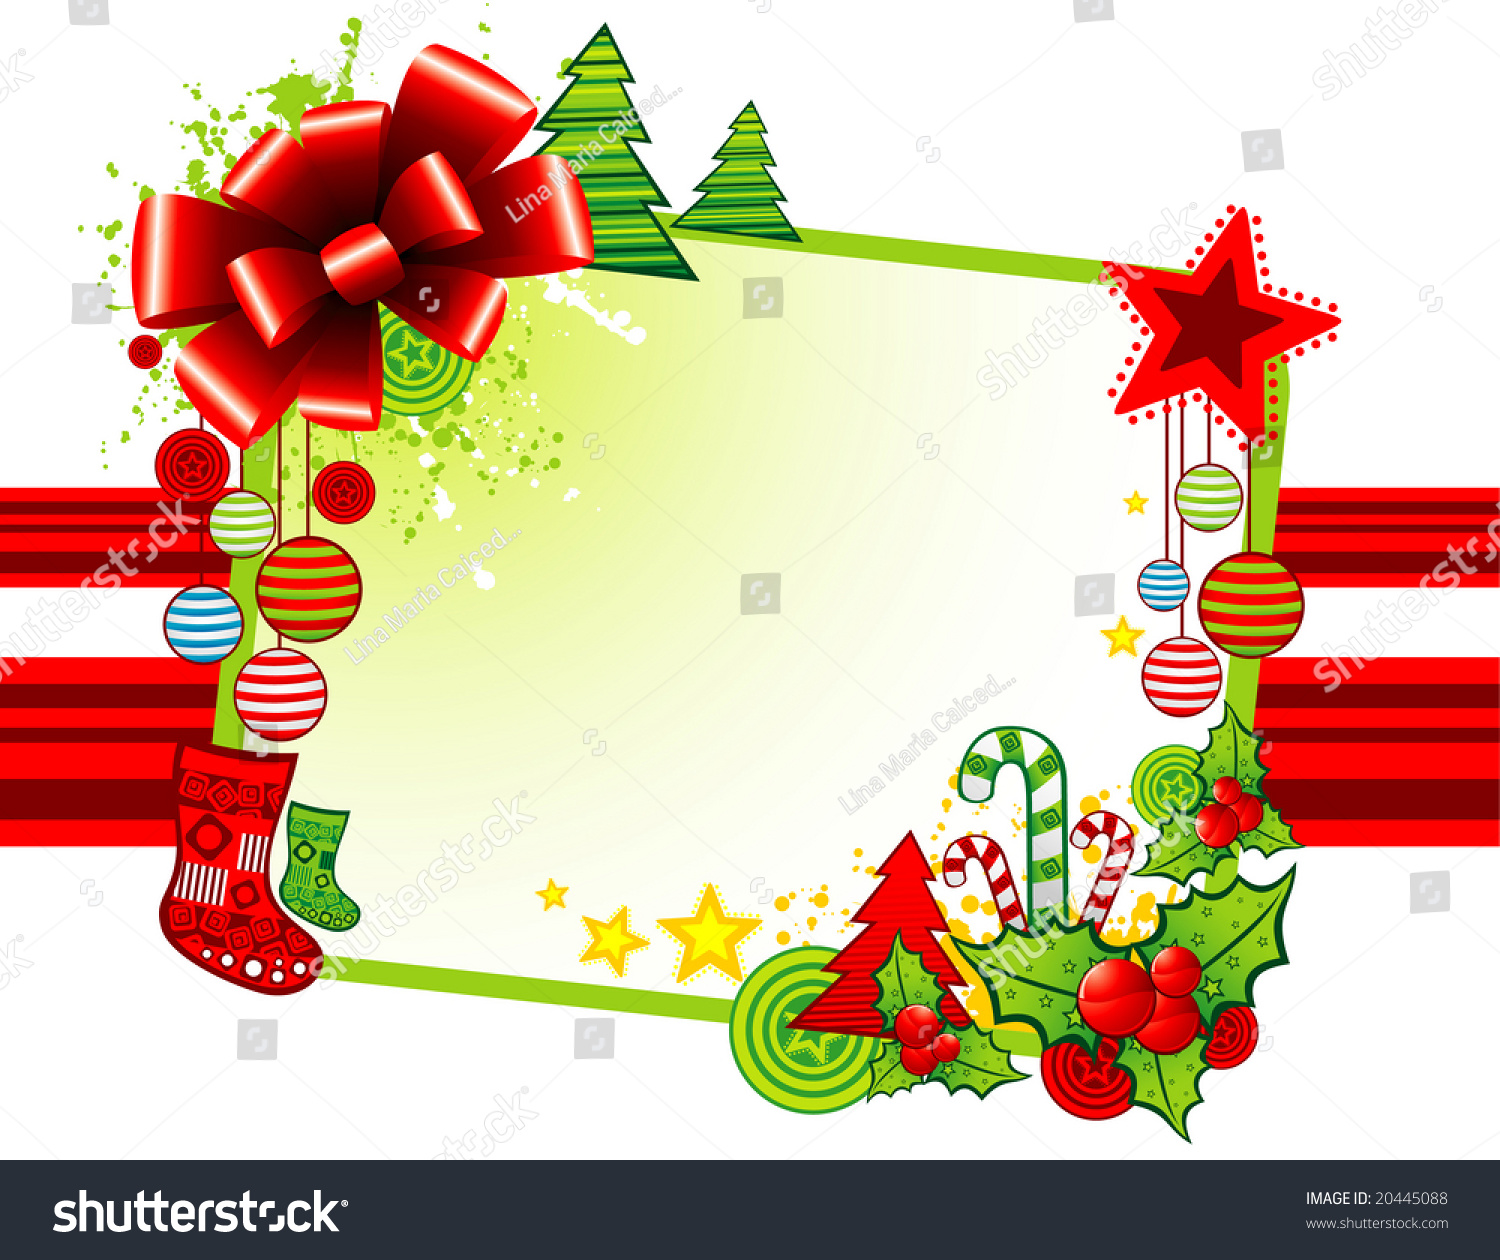 Christmas Vector Illustration - 20445088 : Shutterstock